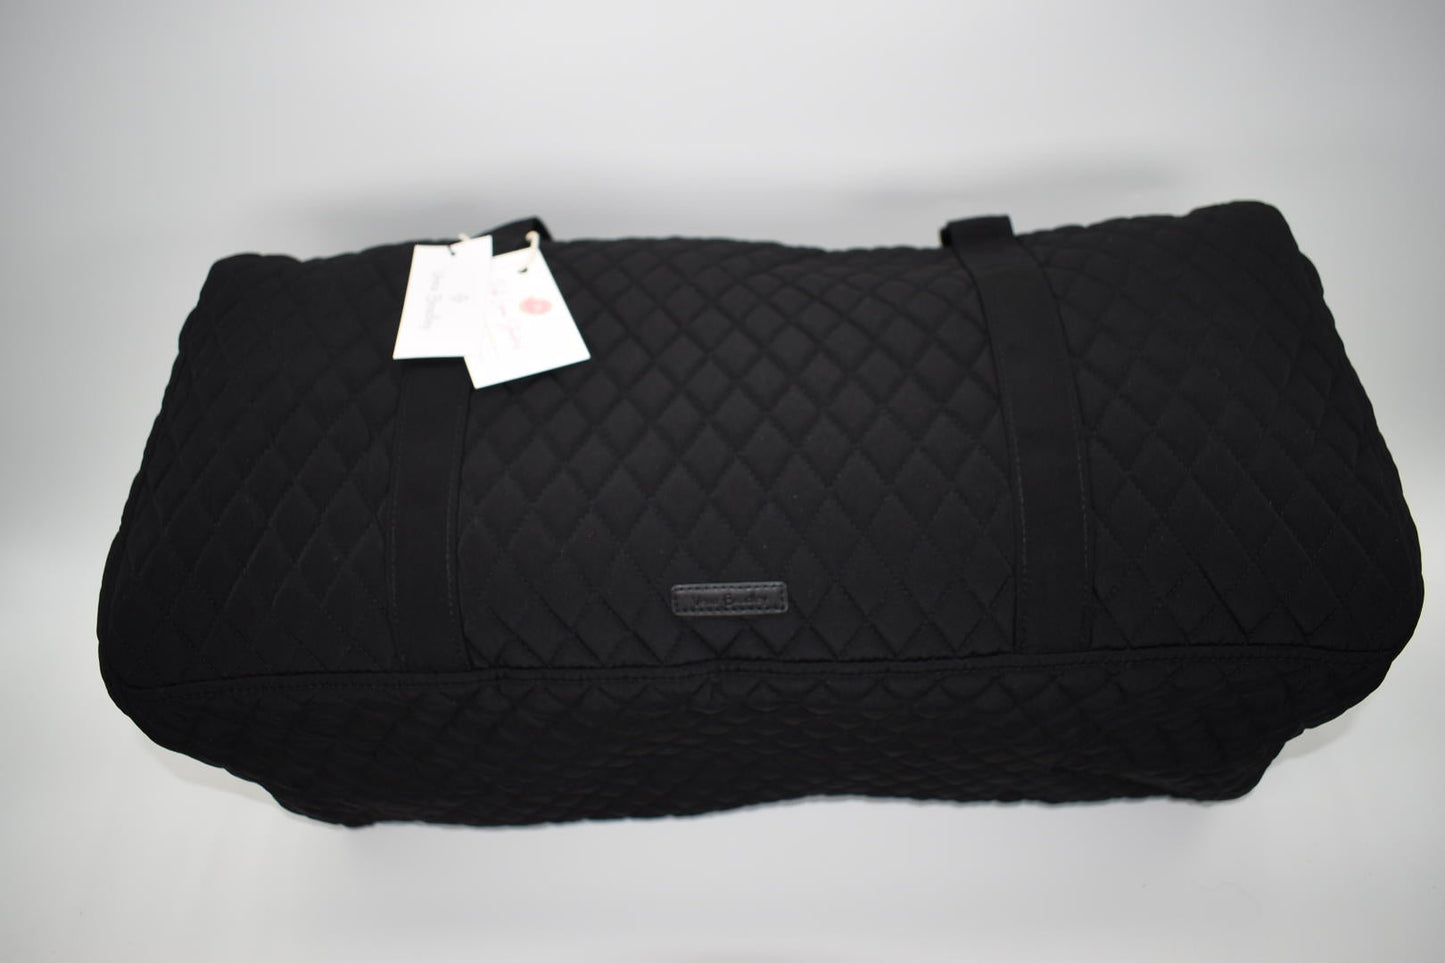 Vera Bradley Microfiber Large Duffel Bag in "Classic Black" Pattern